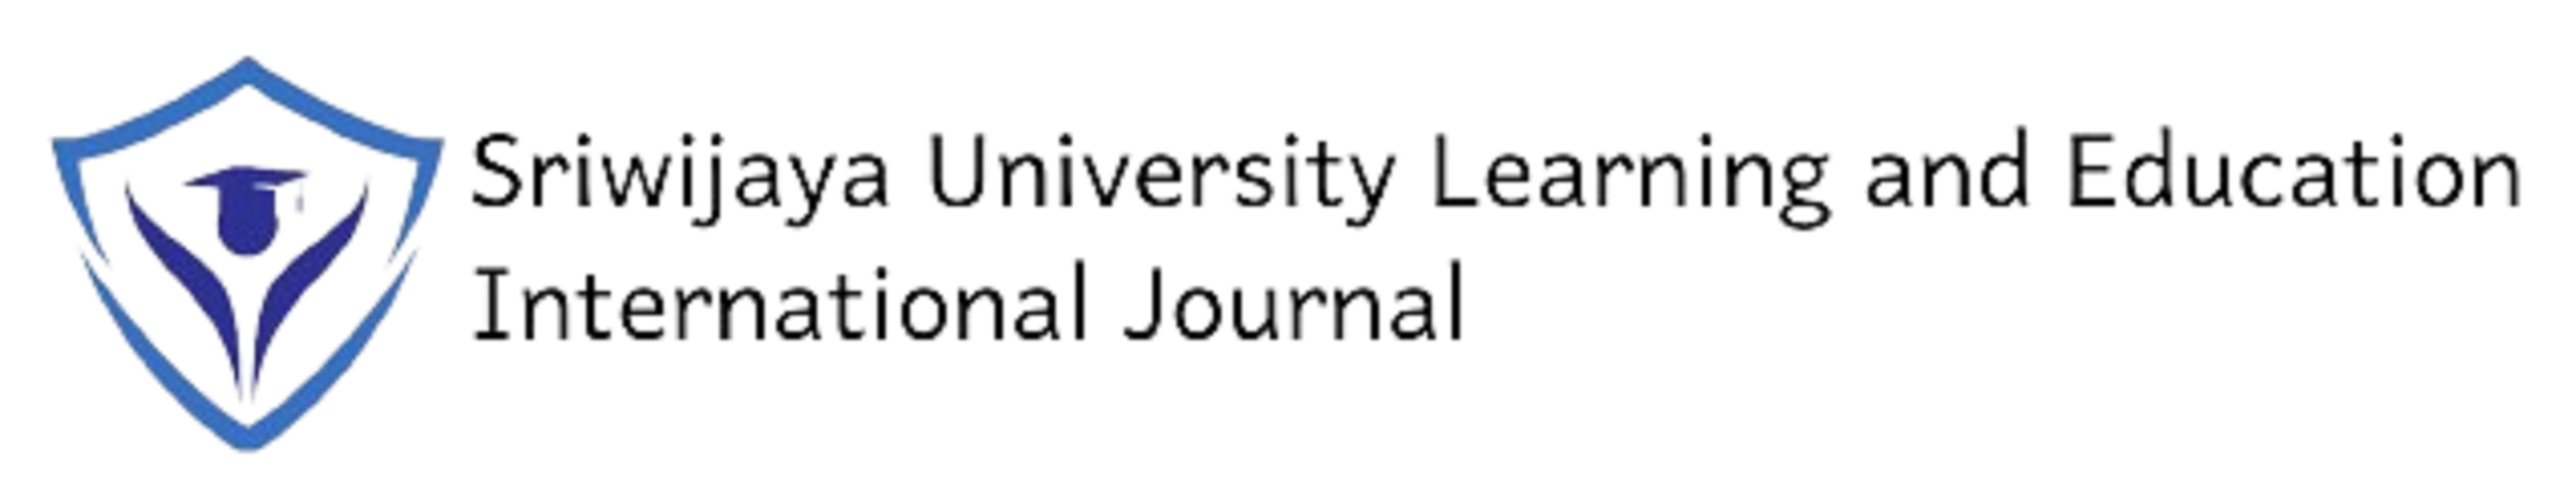 Sriwijaya University Learning and Education International Journal